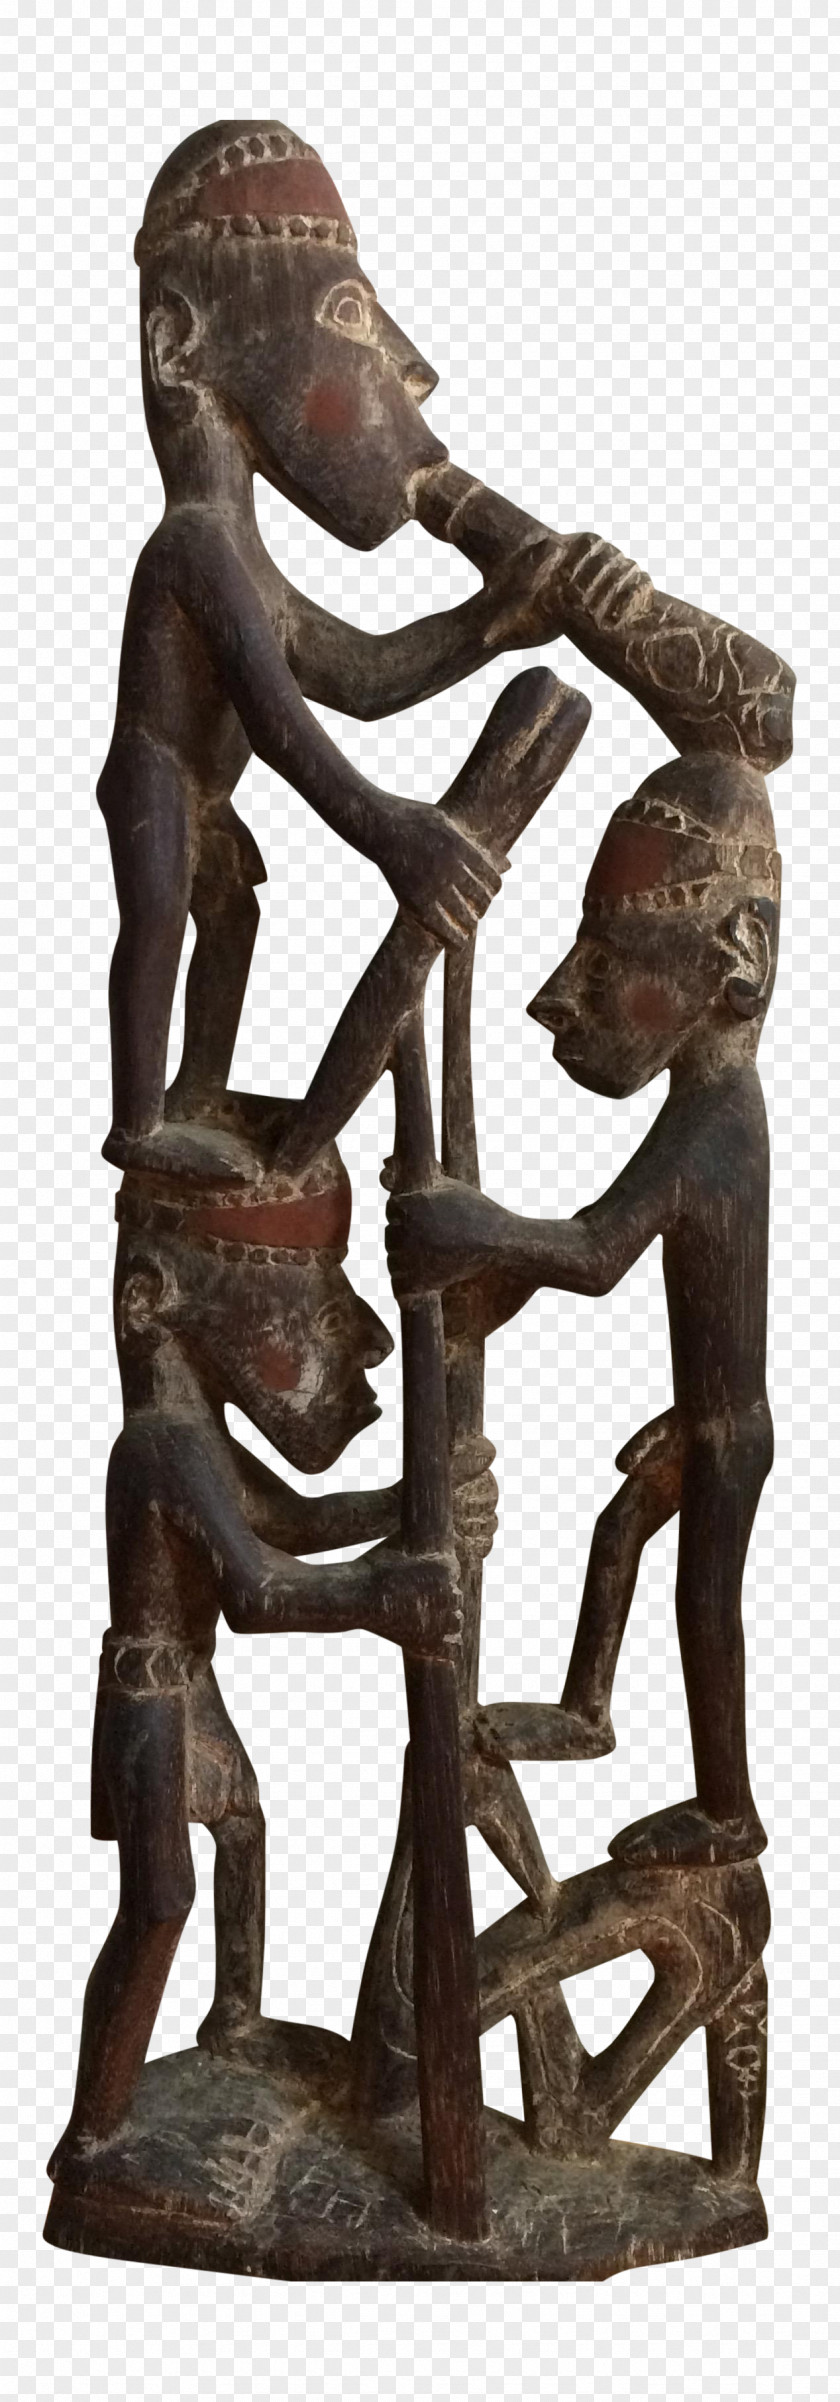 PAPUA NEW GUINEA Sepik River Bronze Sculpture Kairiru Island Iatmul People PNG